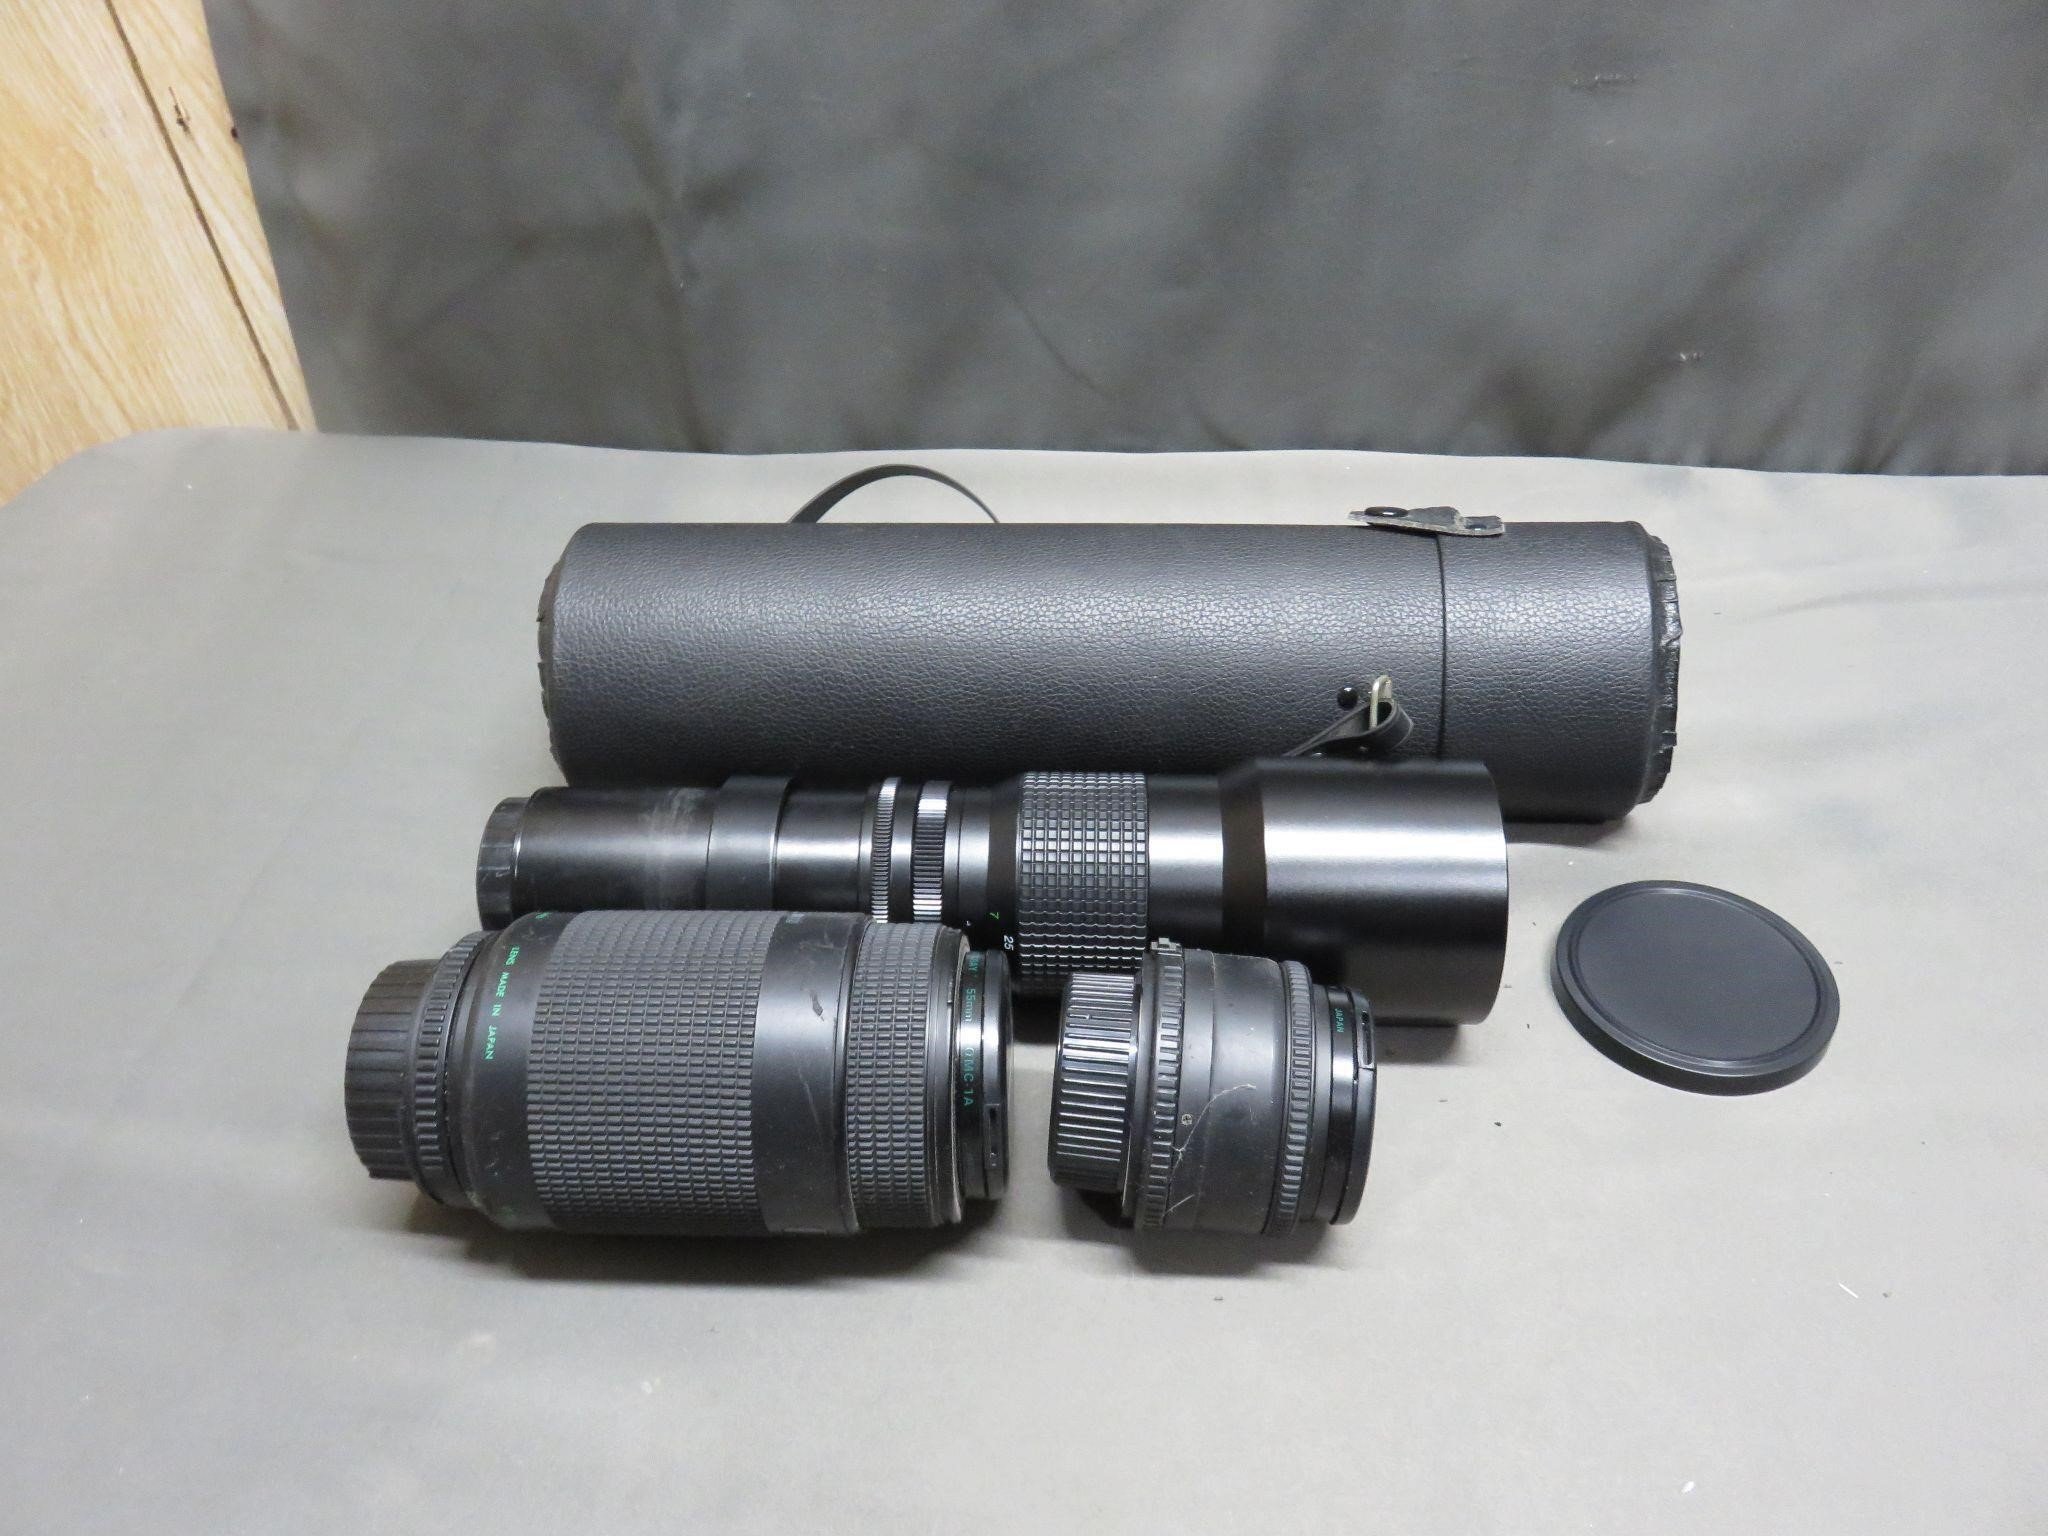 Lot of 3 Quantaray Camera Lens and Cases